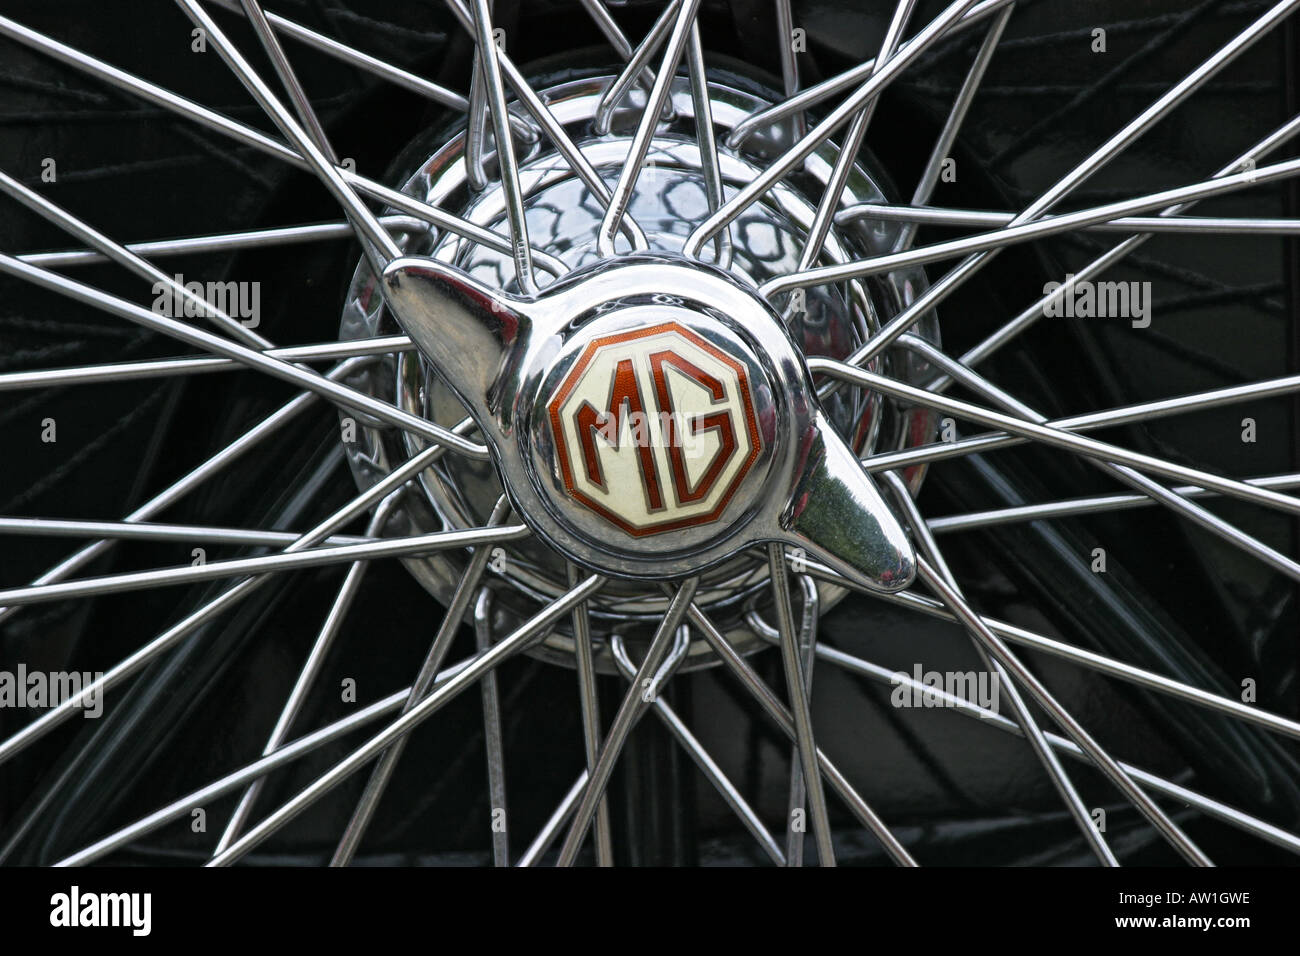 Hub and spokes of an MG vintage car sportscar Stock Photo